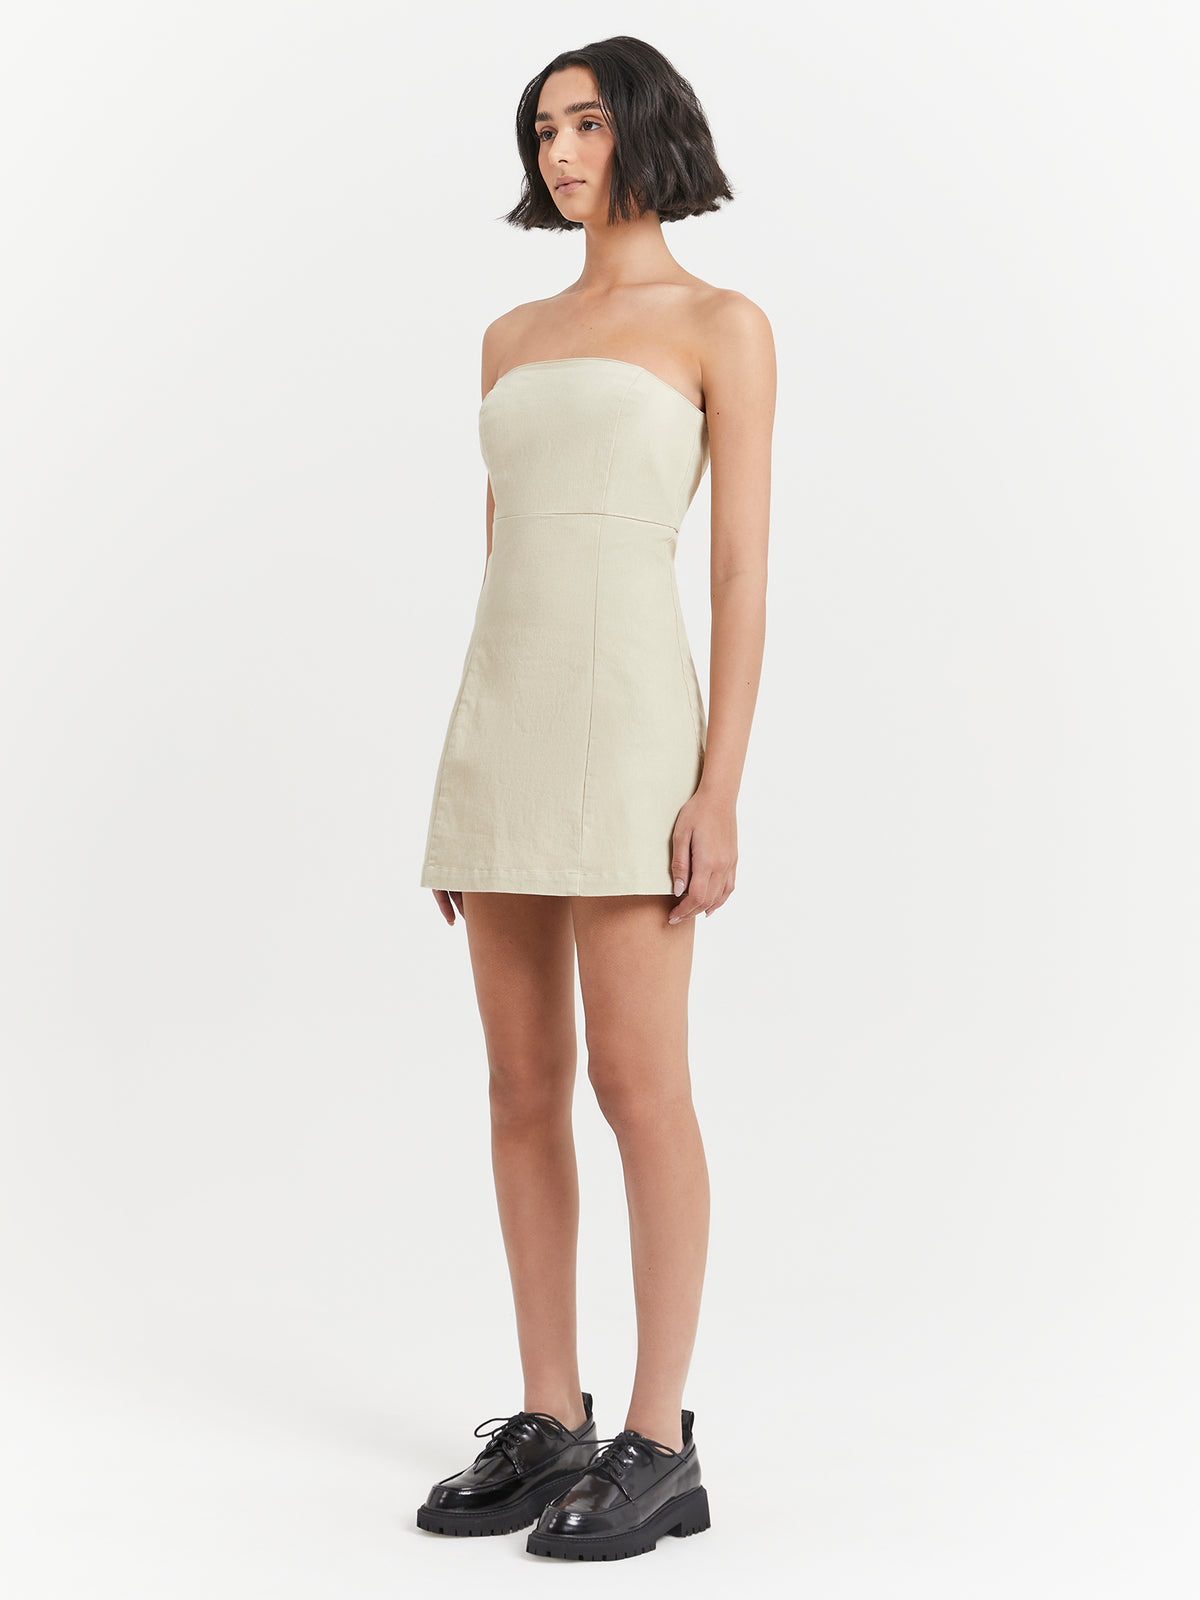 Carey Strapless Mini Dress in Oatmeal